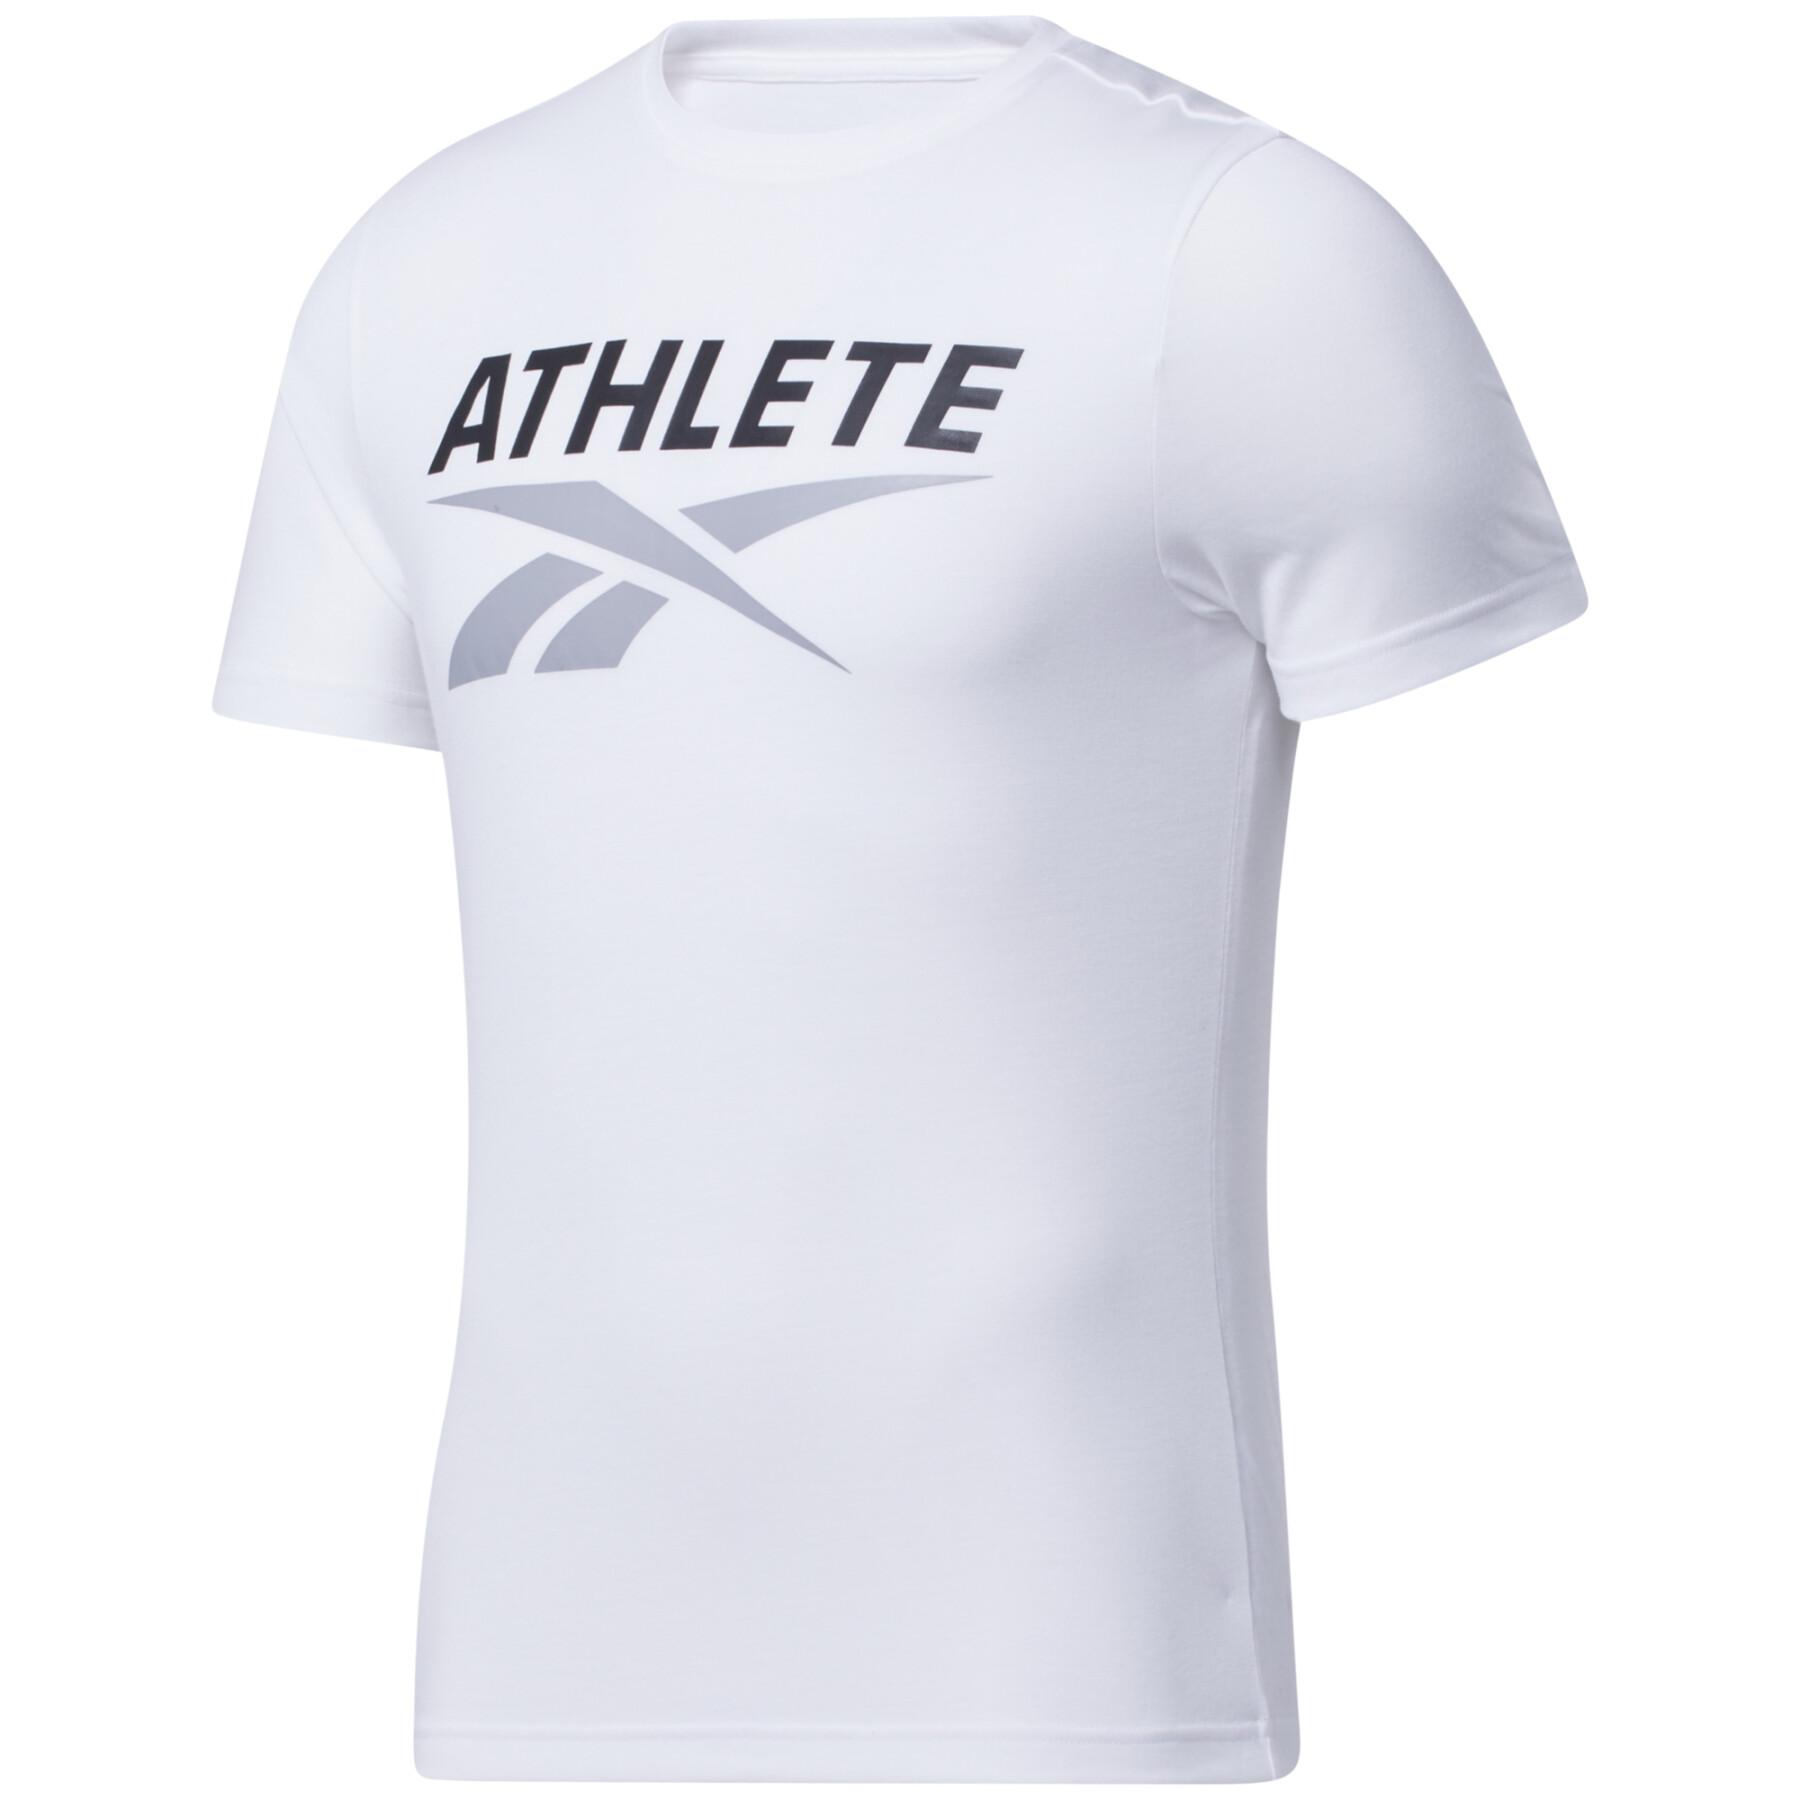 Koszulka Reebok Vector Graphic Athlete